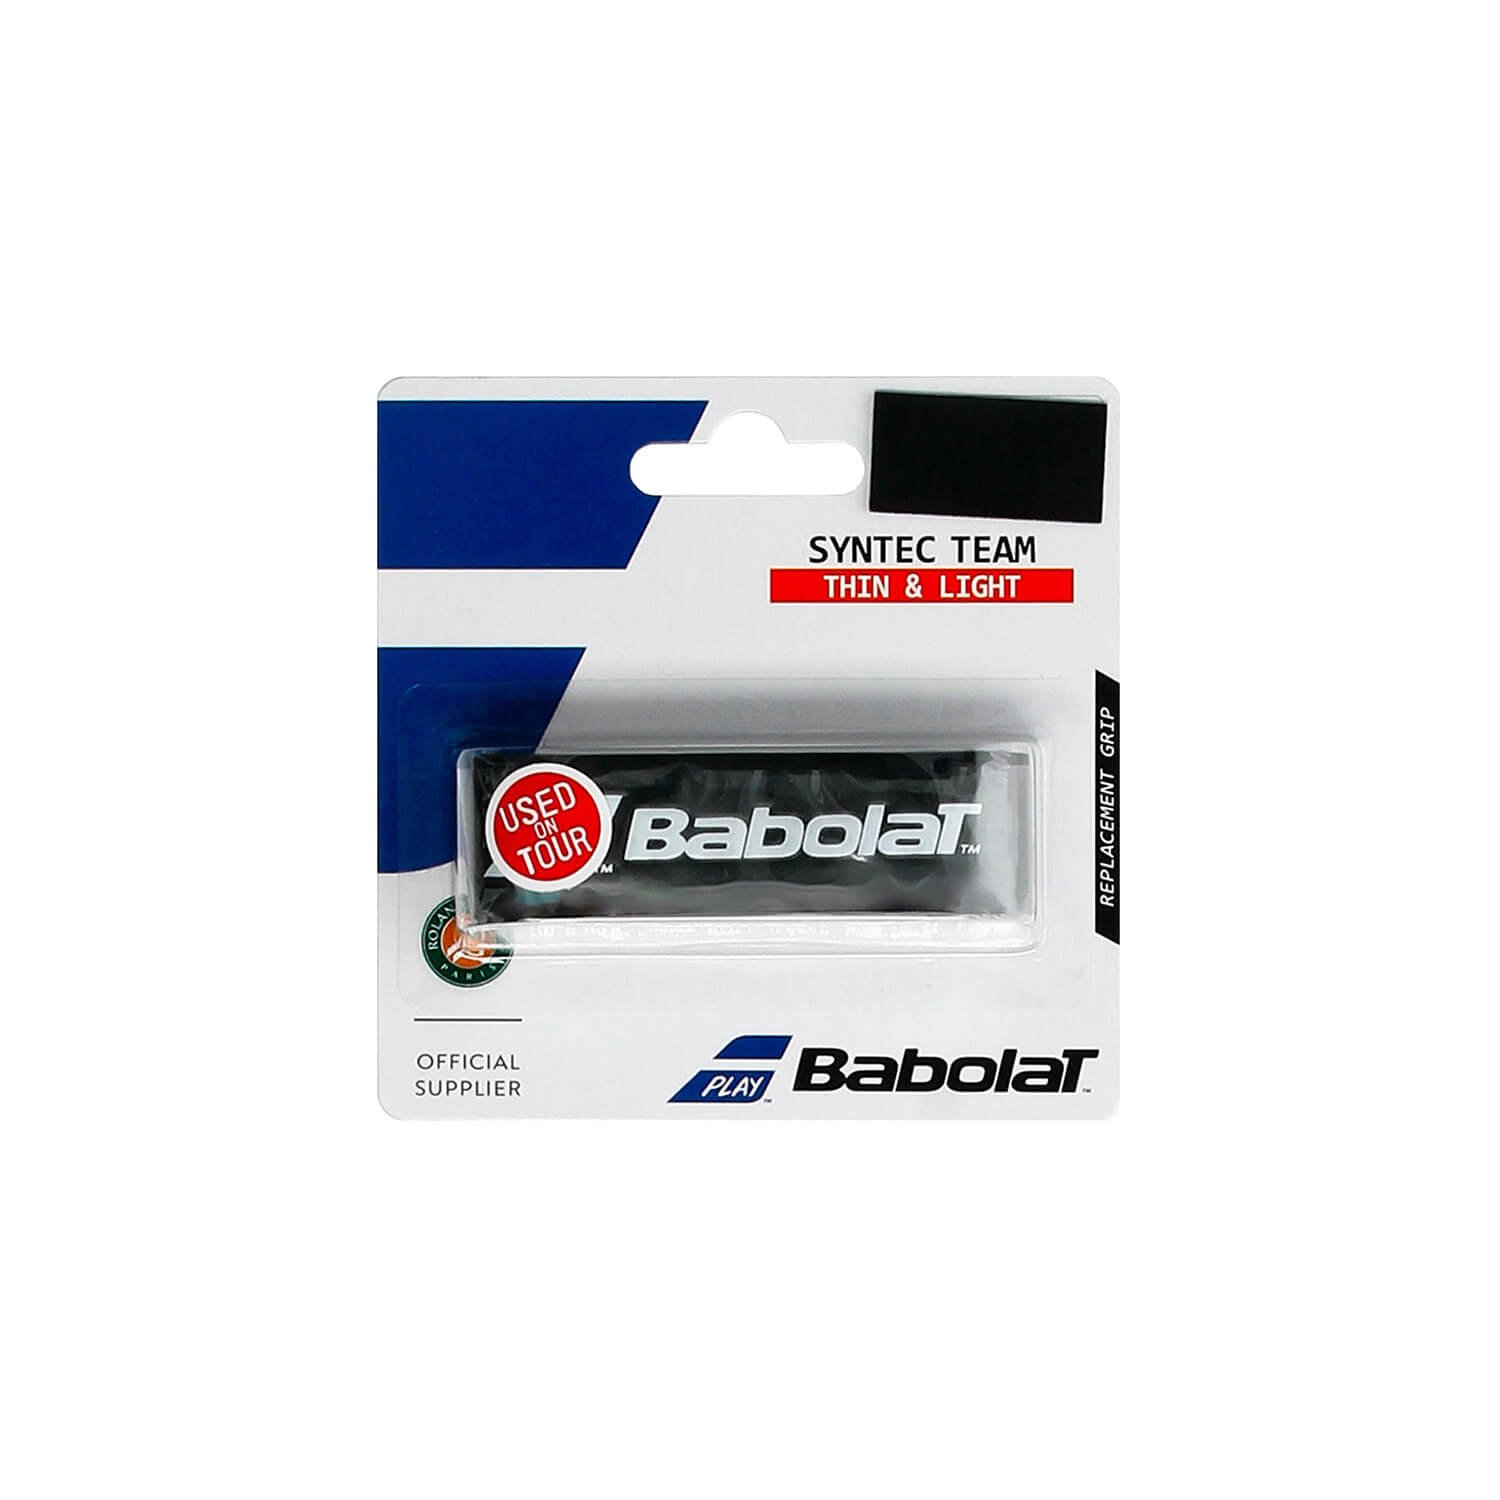 Babolat Syntec Team X1 Tenis Raketi Ana Grip - SİYAH - 1